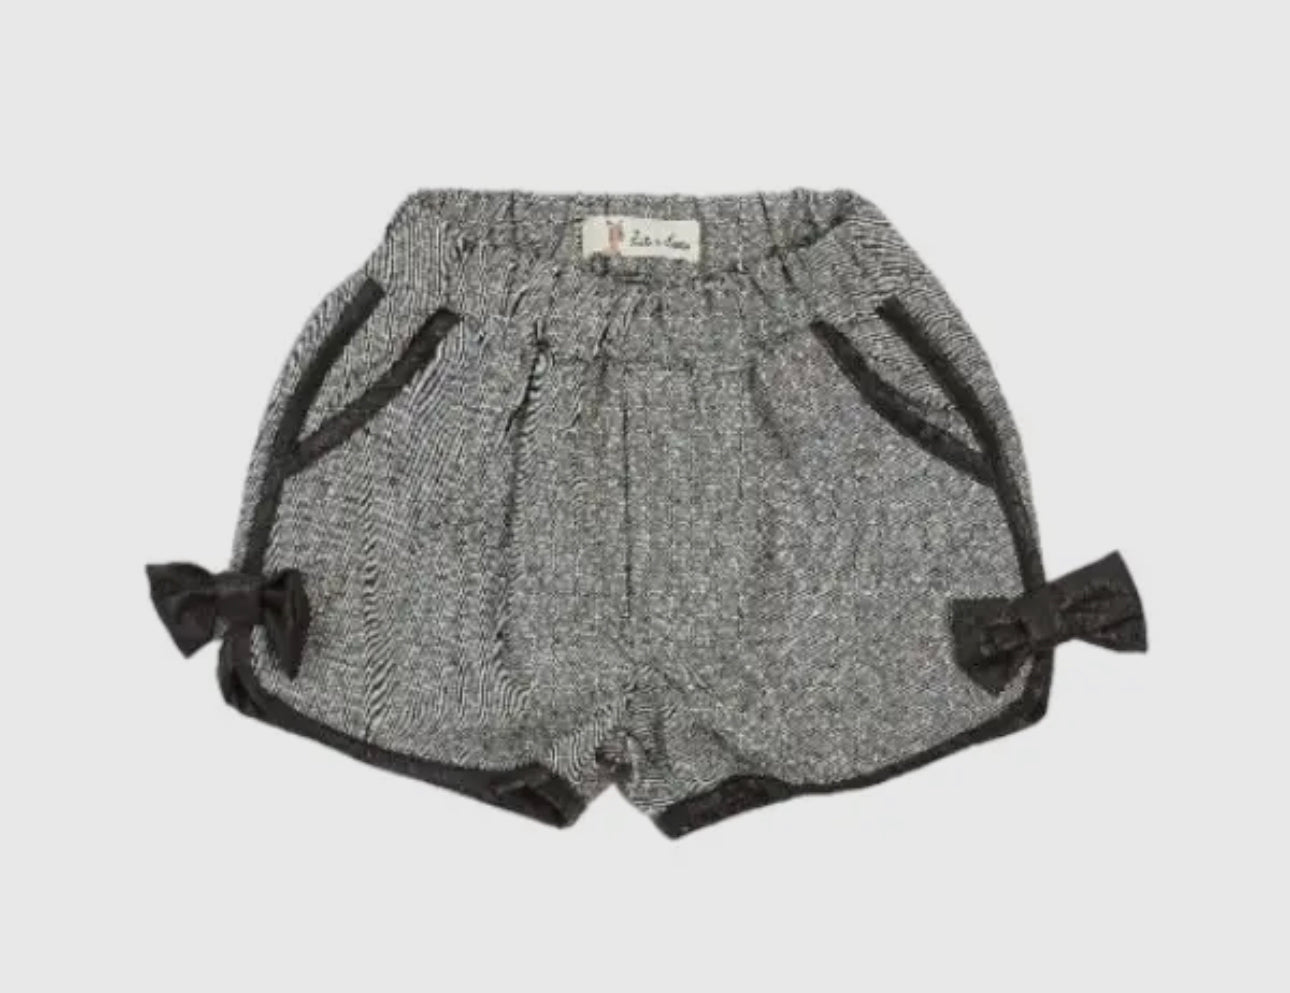 Tweed Shorts w/ Bow